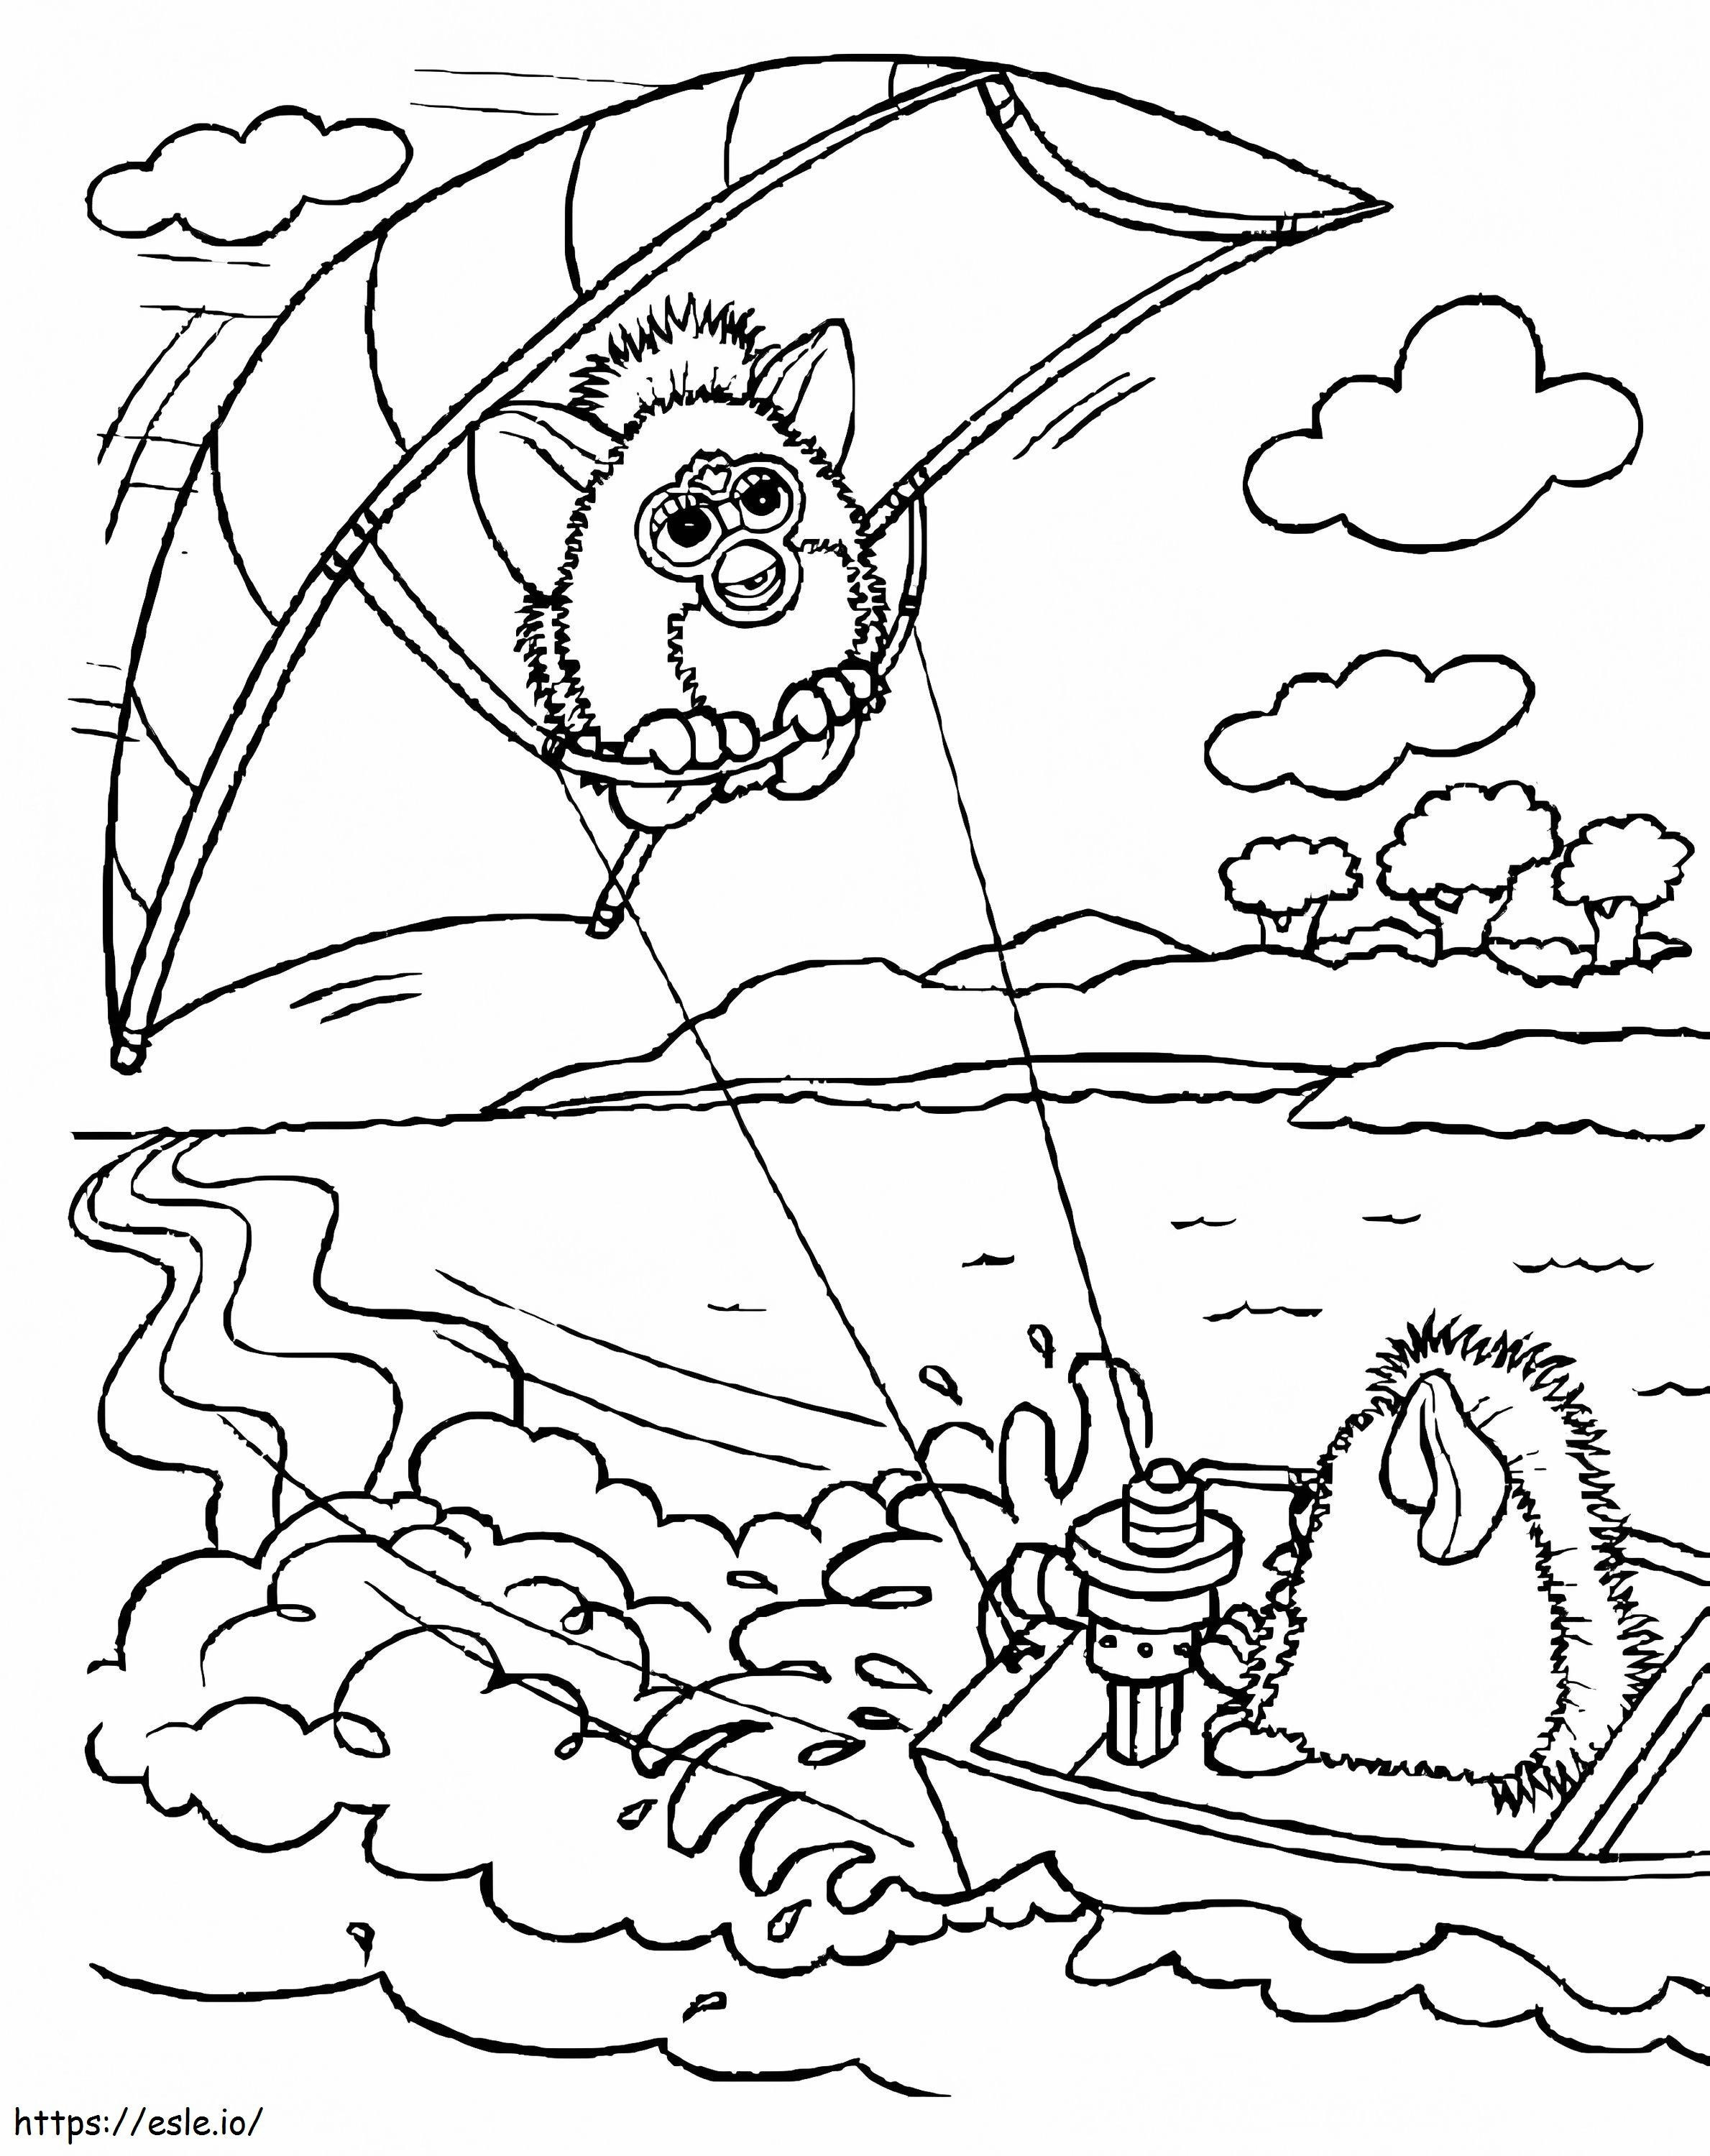 Furby Having Fun coloring page